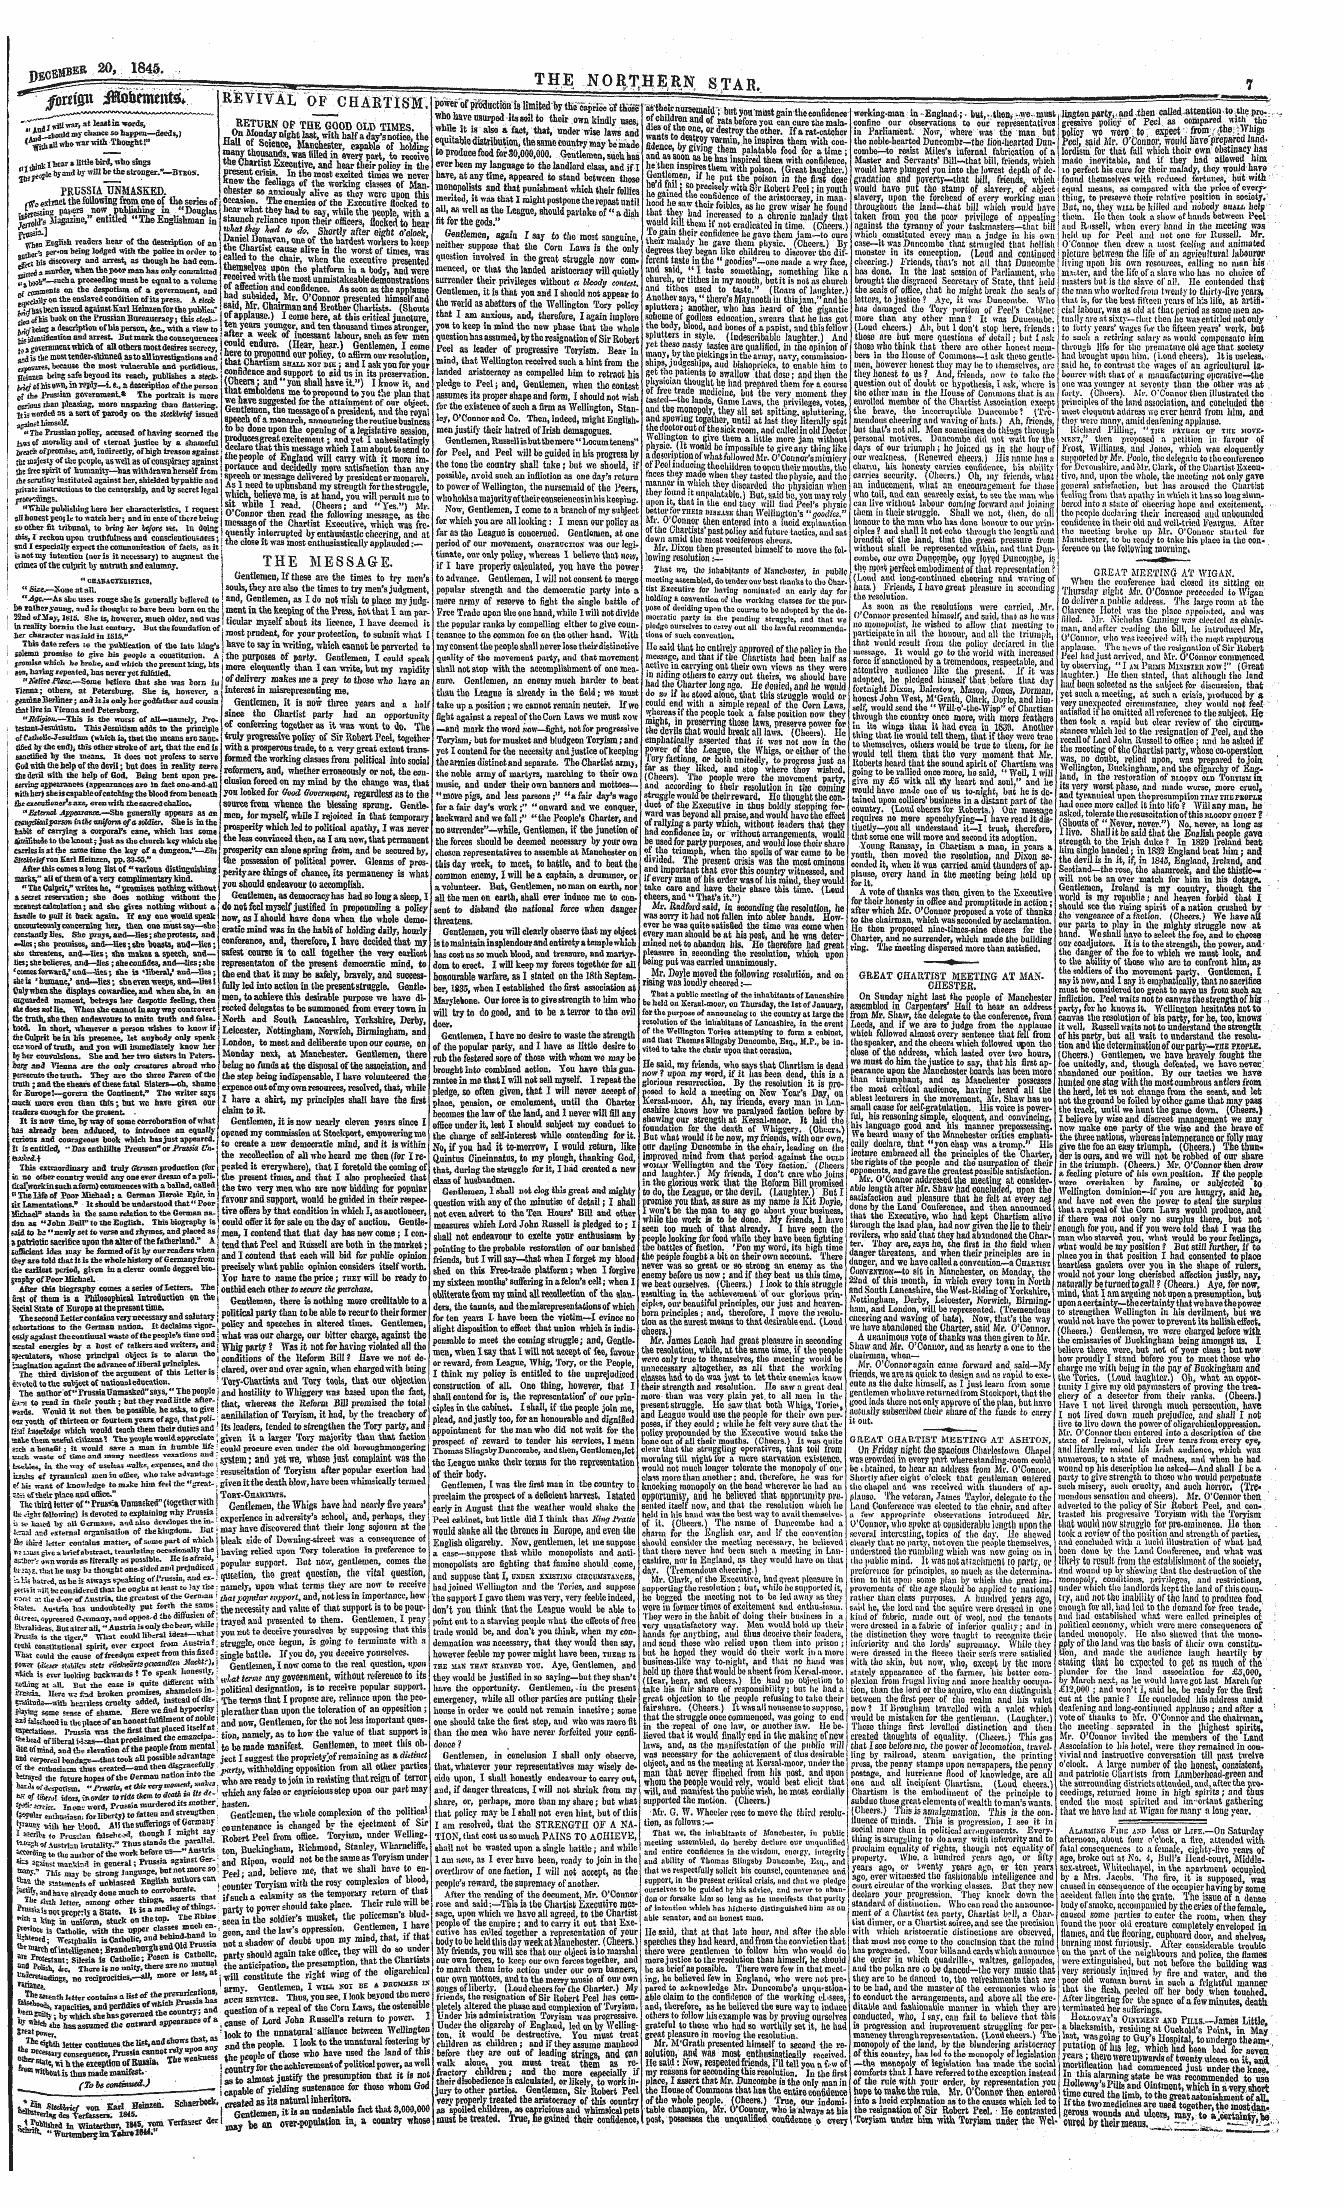 Northern Star (1837-1852): jS F Y, 4th edition - Puim M&Tewvx